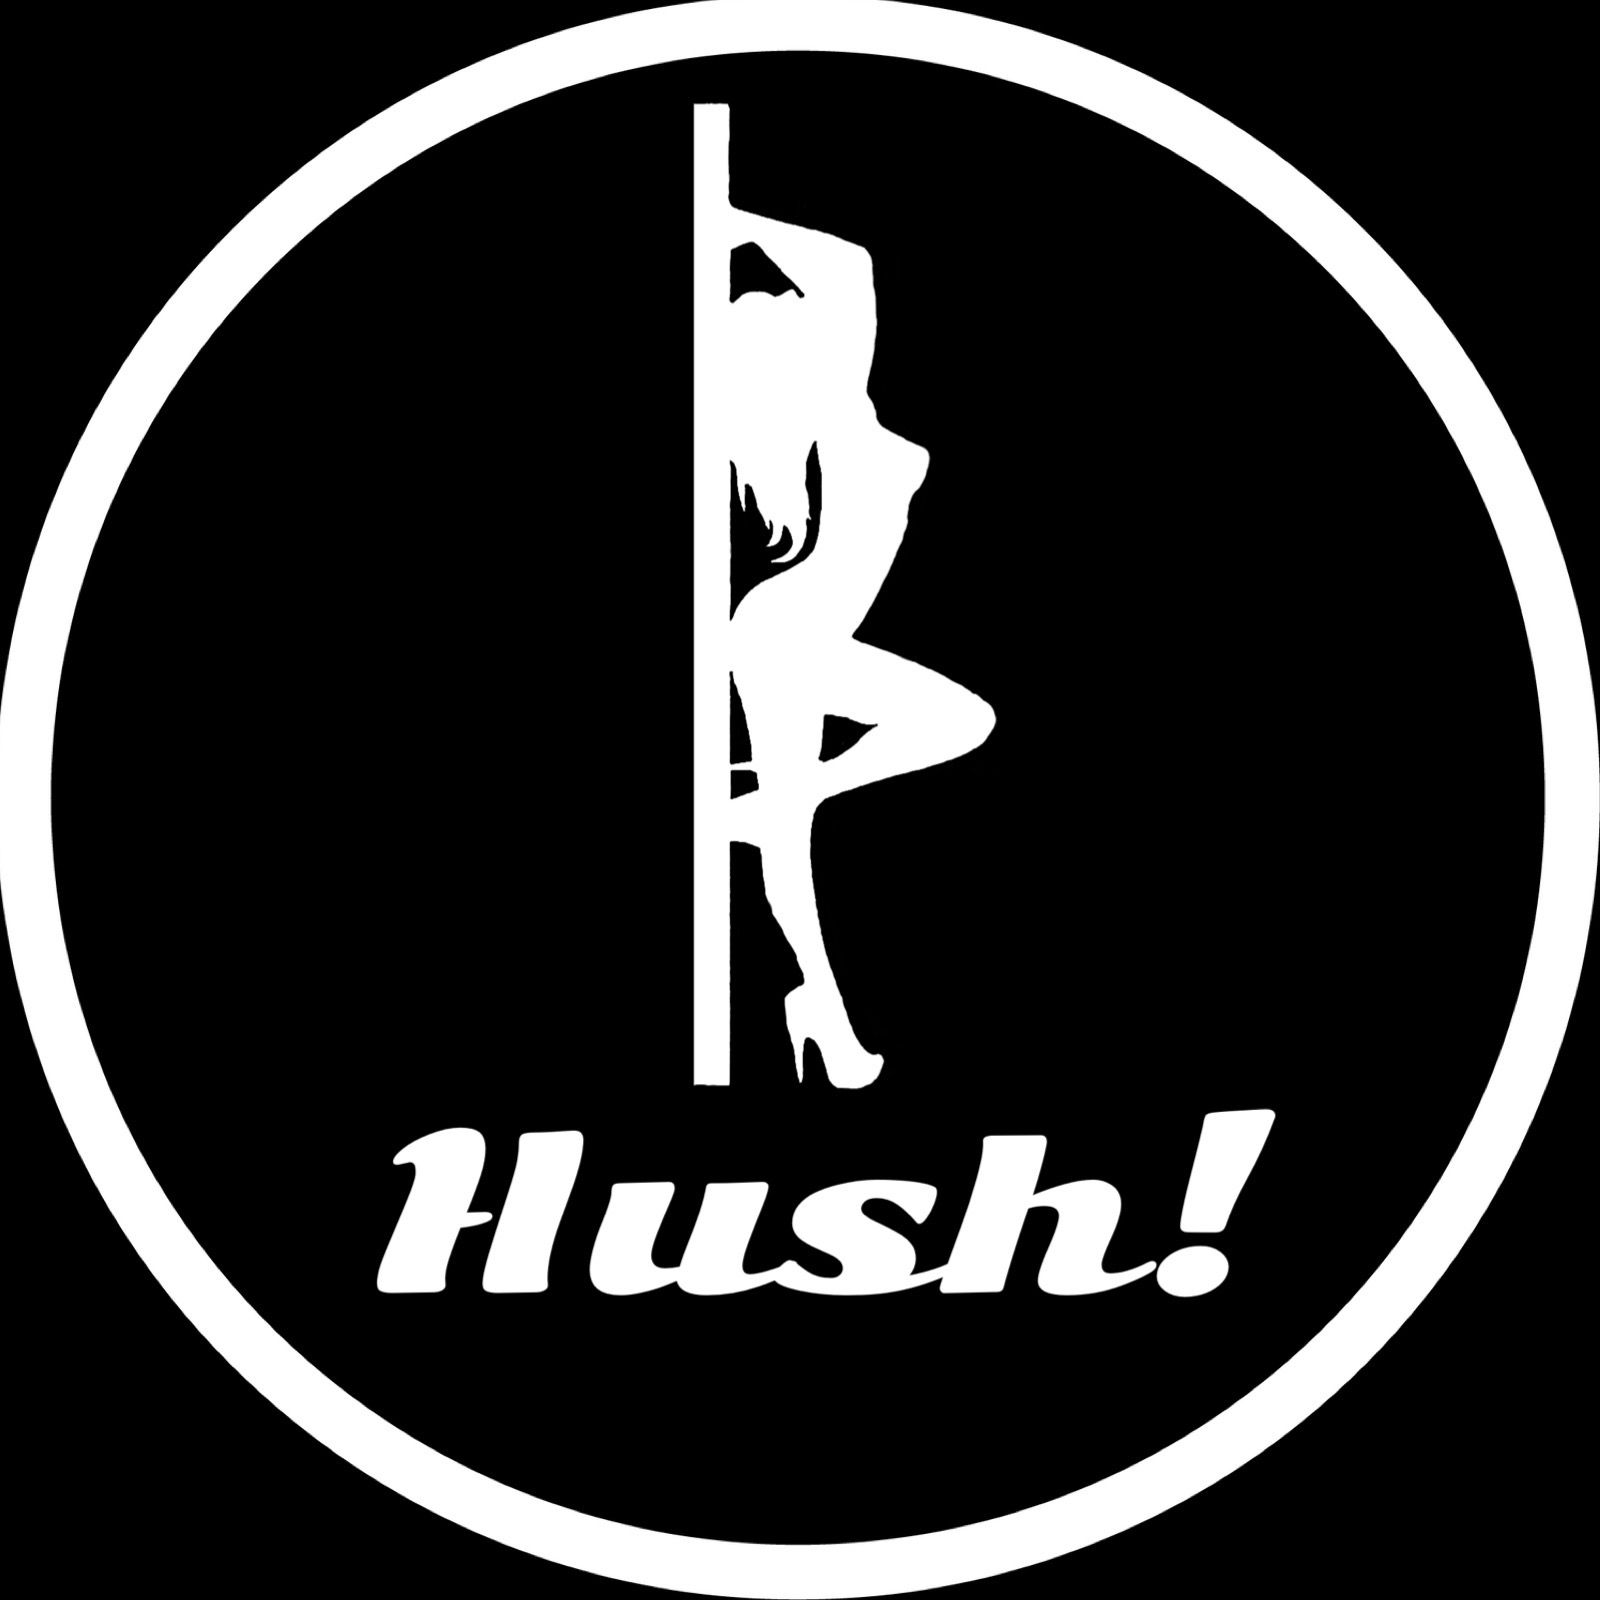 Hush! - Hush! Vol. 48- One on One with Cindy Starfall